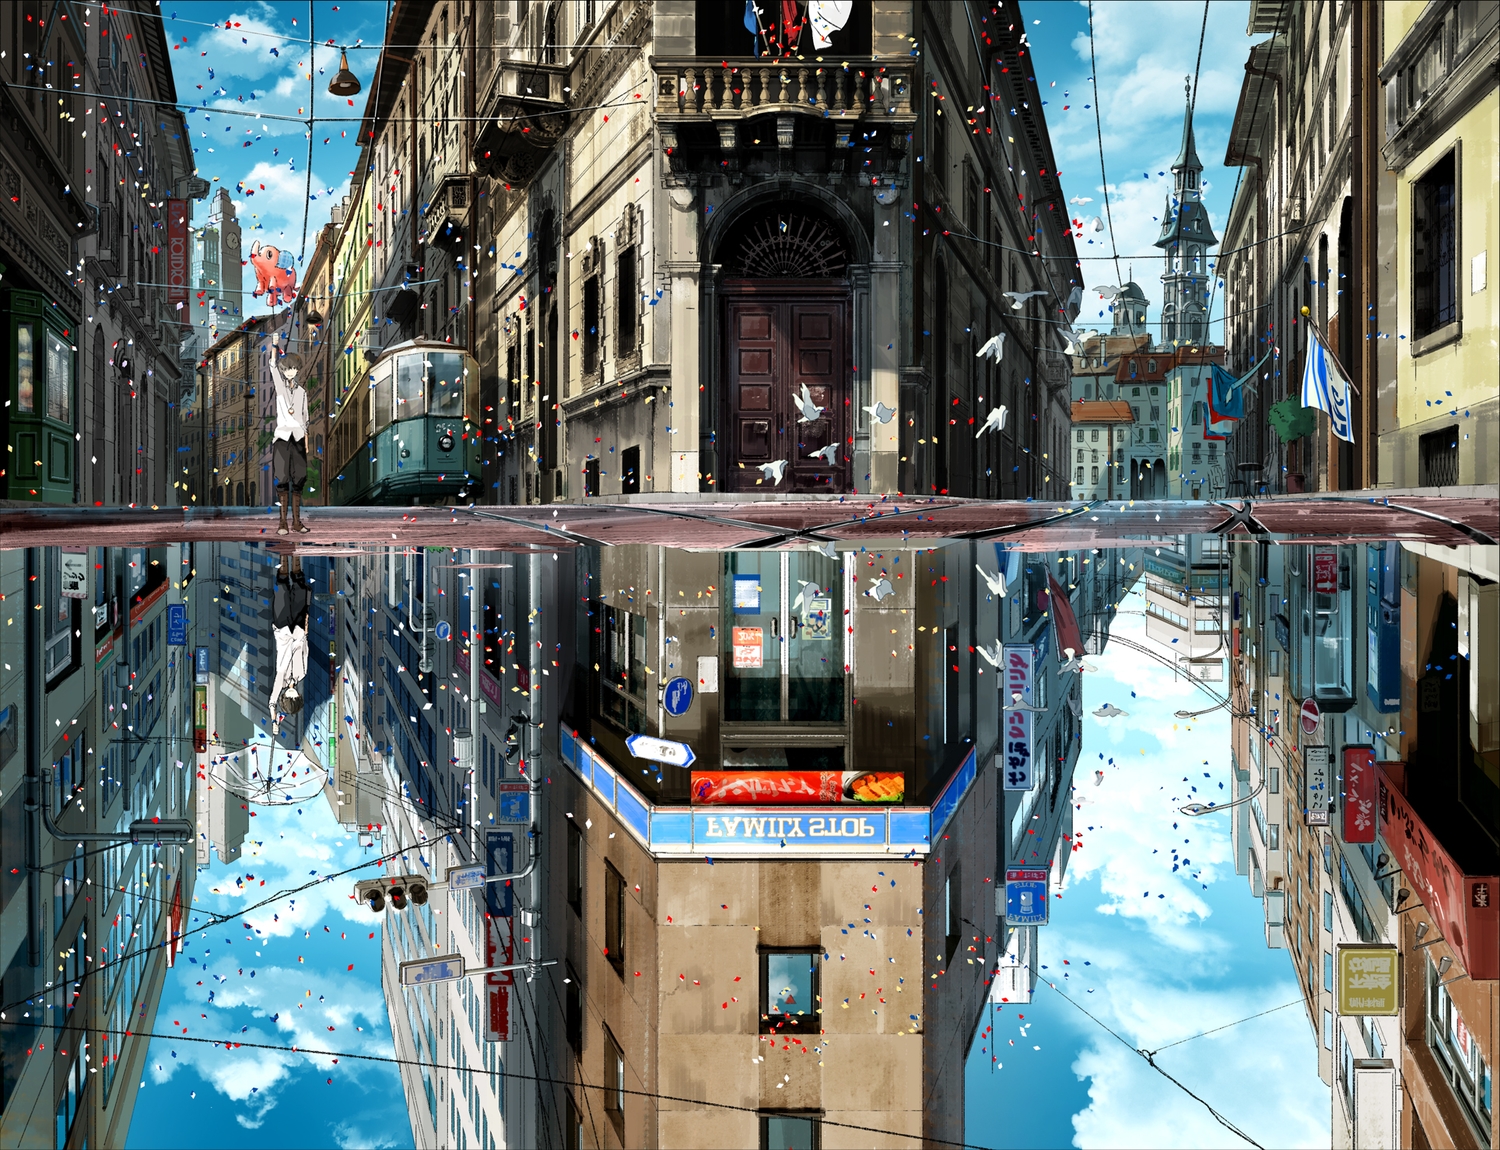 Building Digital Art Birds Reflection Train Water City Festivals Anime Ryan Van Dongen 1500x1150